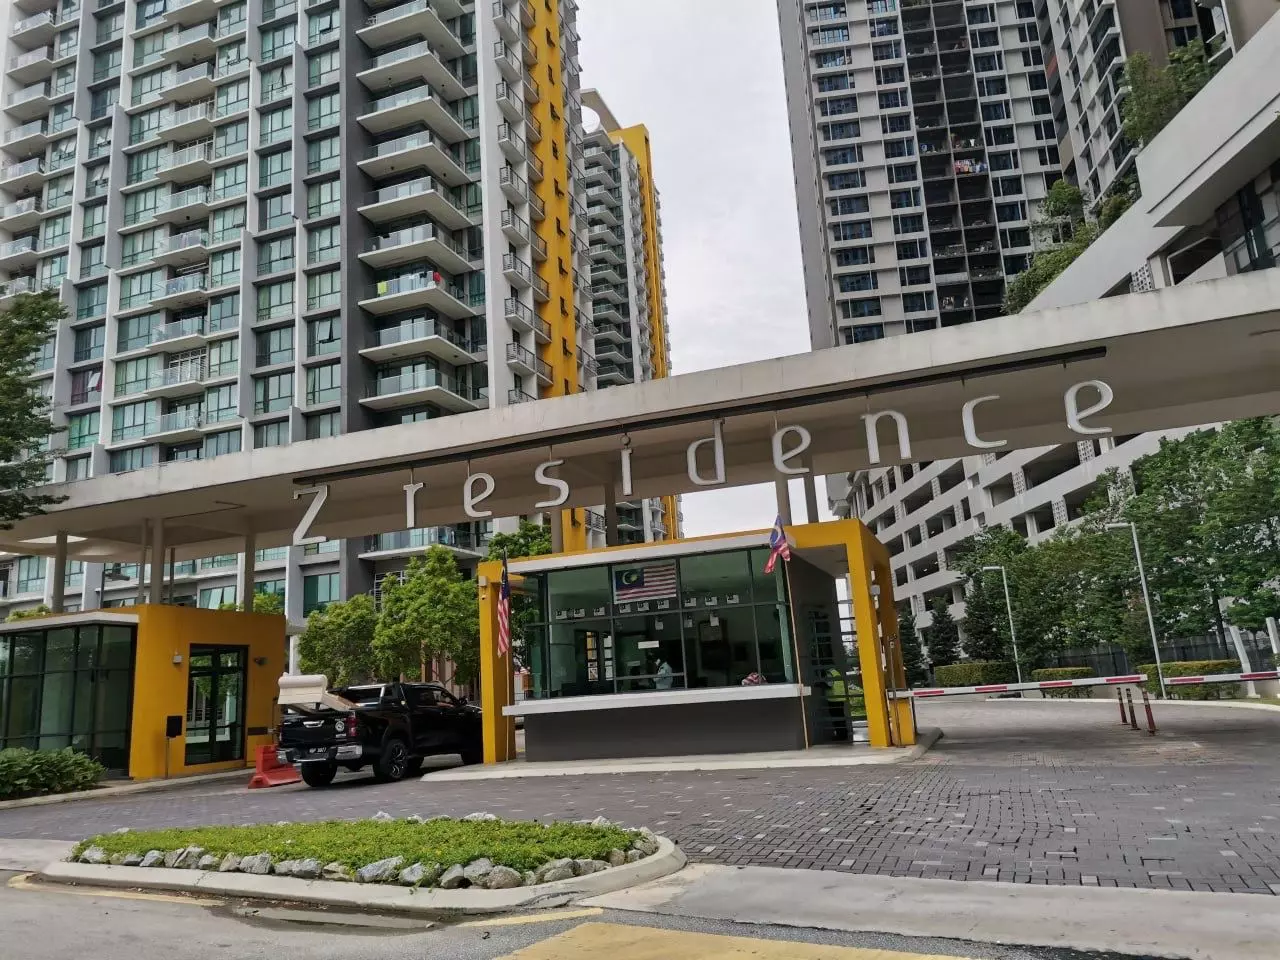 Rumah Lelong Z Residence @ Bukit Jalil, Kuala Lumpur for Auction